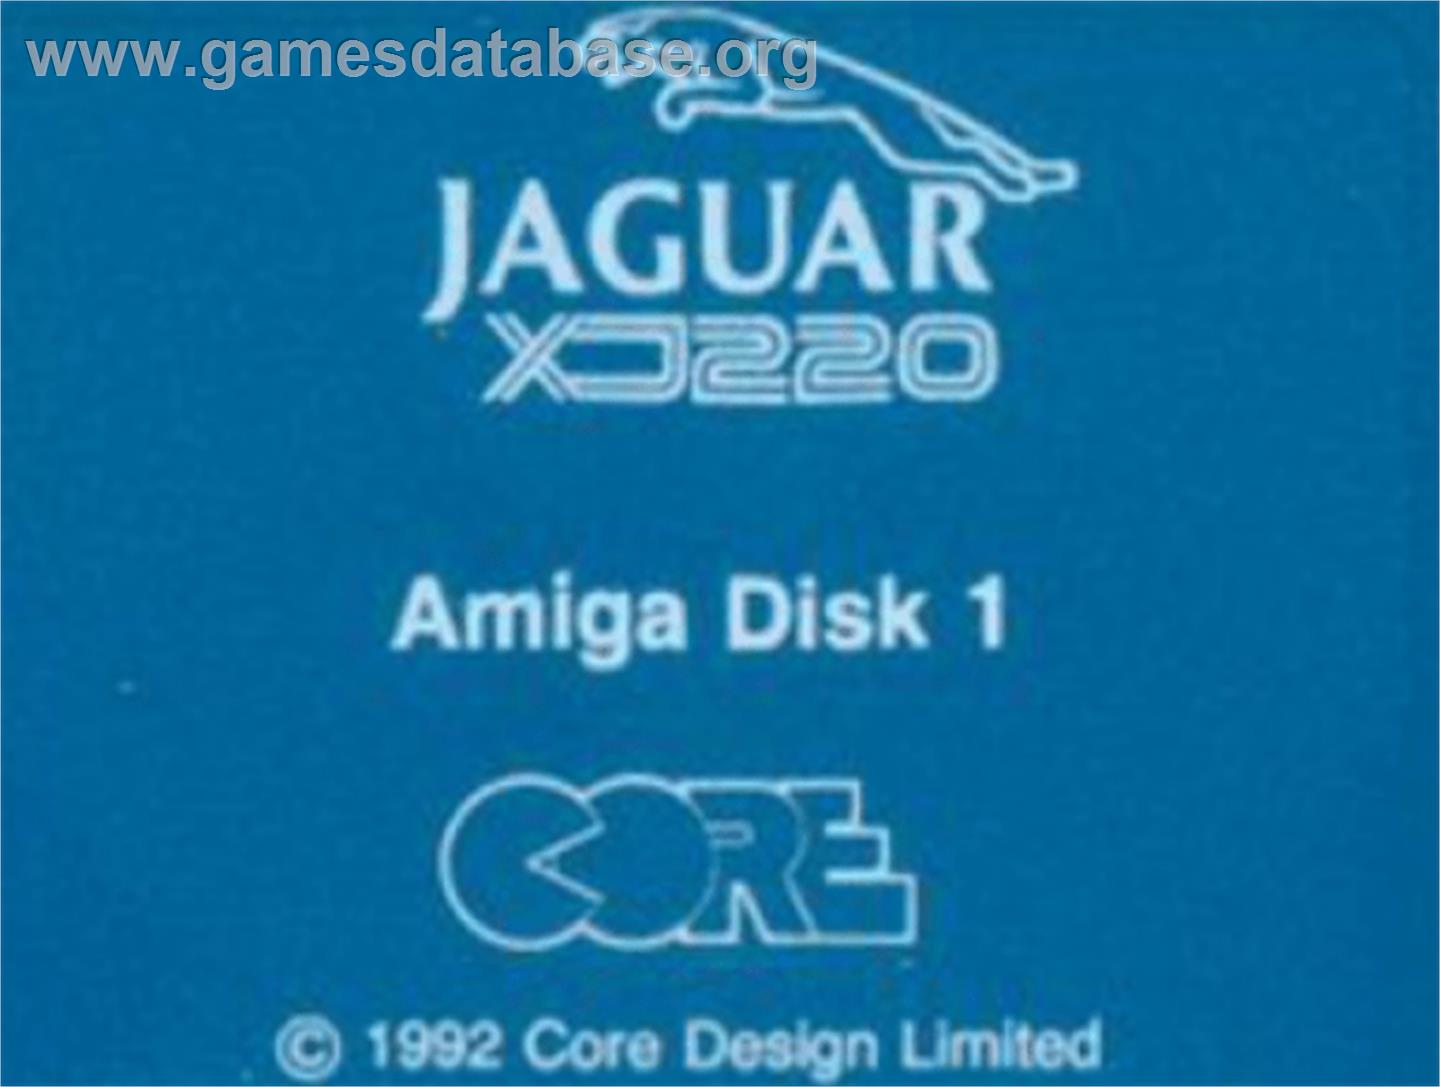 Jaguar XJ220 - Commodore Amiga - Artwork - Cartridge Top